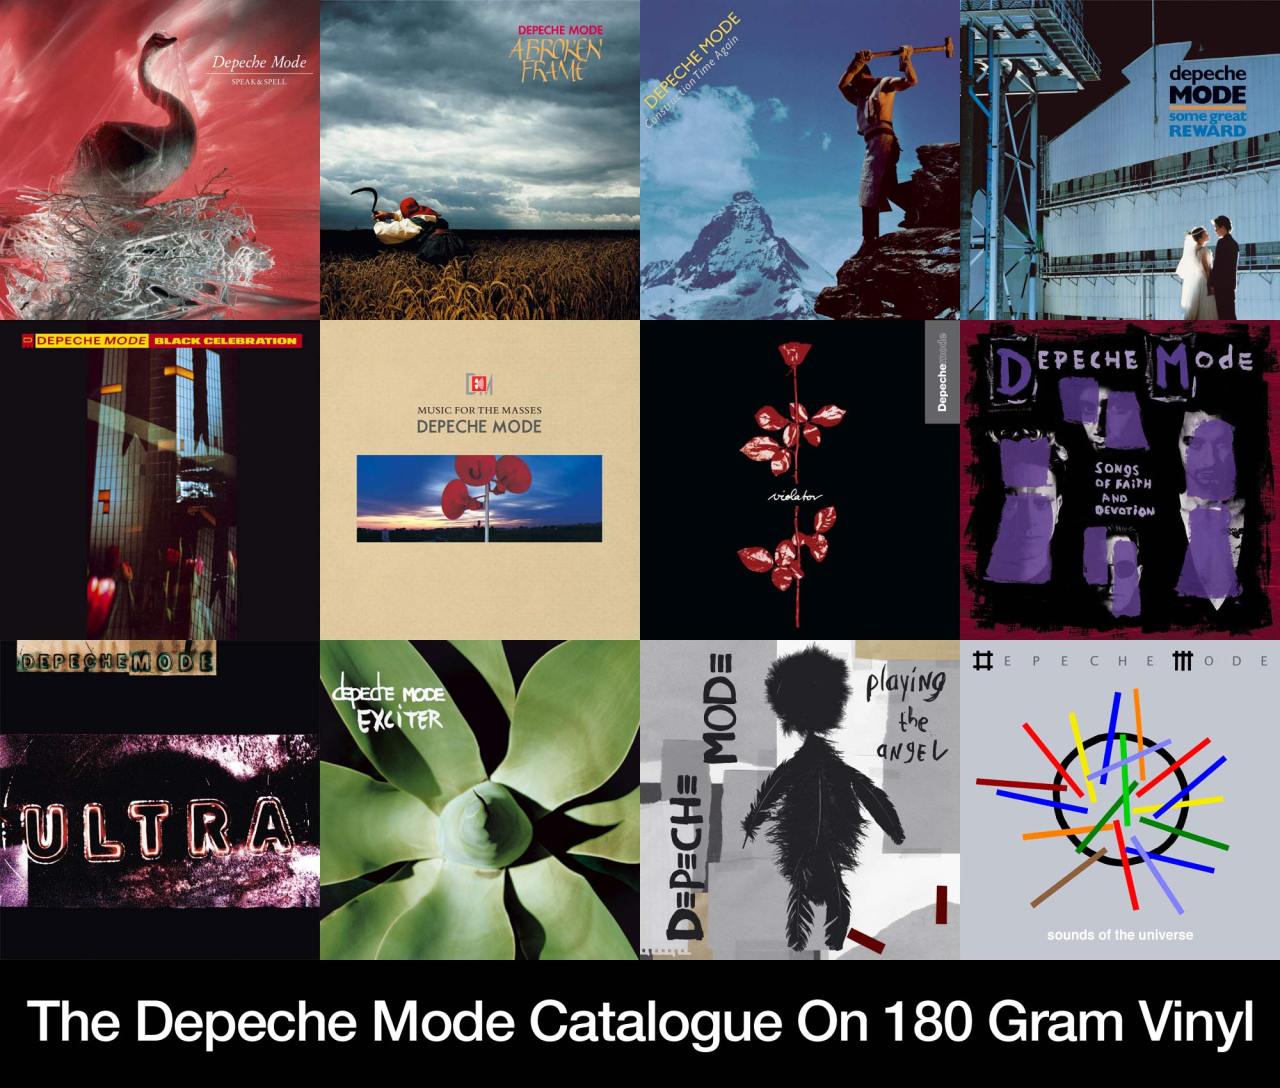 Depeche Mode ‎– A Broken Frame / Sony Music ‎Audio CD 2006 / 88883751342 -  Bible in My Language